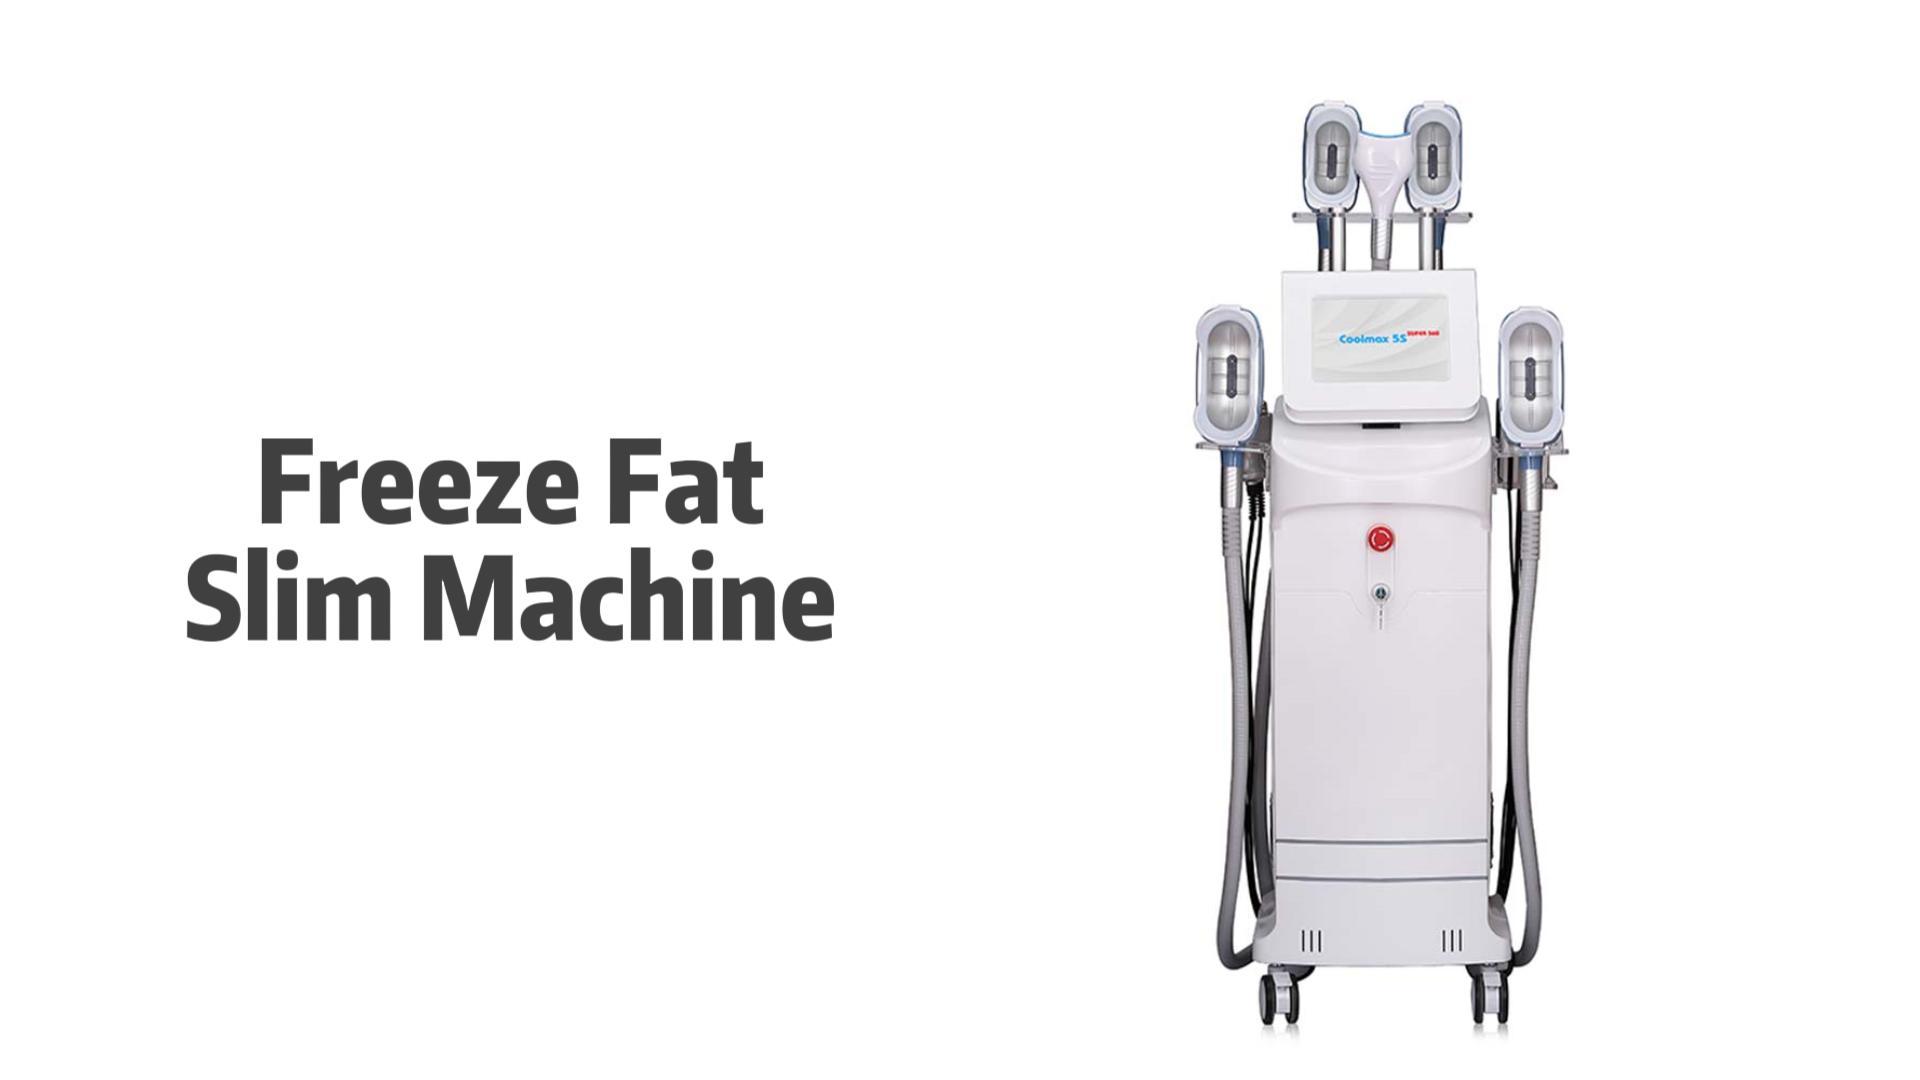 cryo machine for fat freezing, cryolipolysis body slimming machine, cryolipolysis fat freeze slimming machine, cryotherapy fat freezing machine